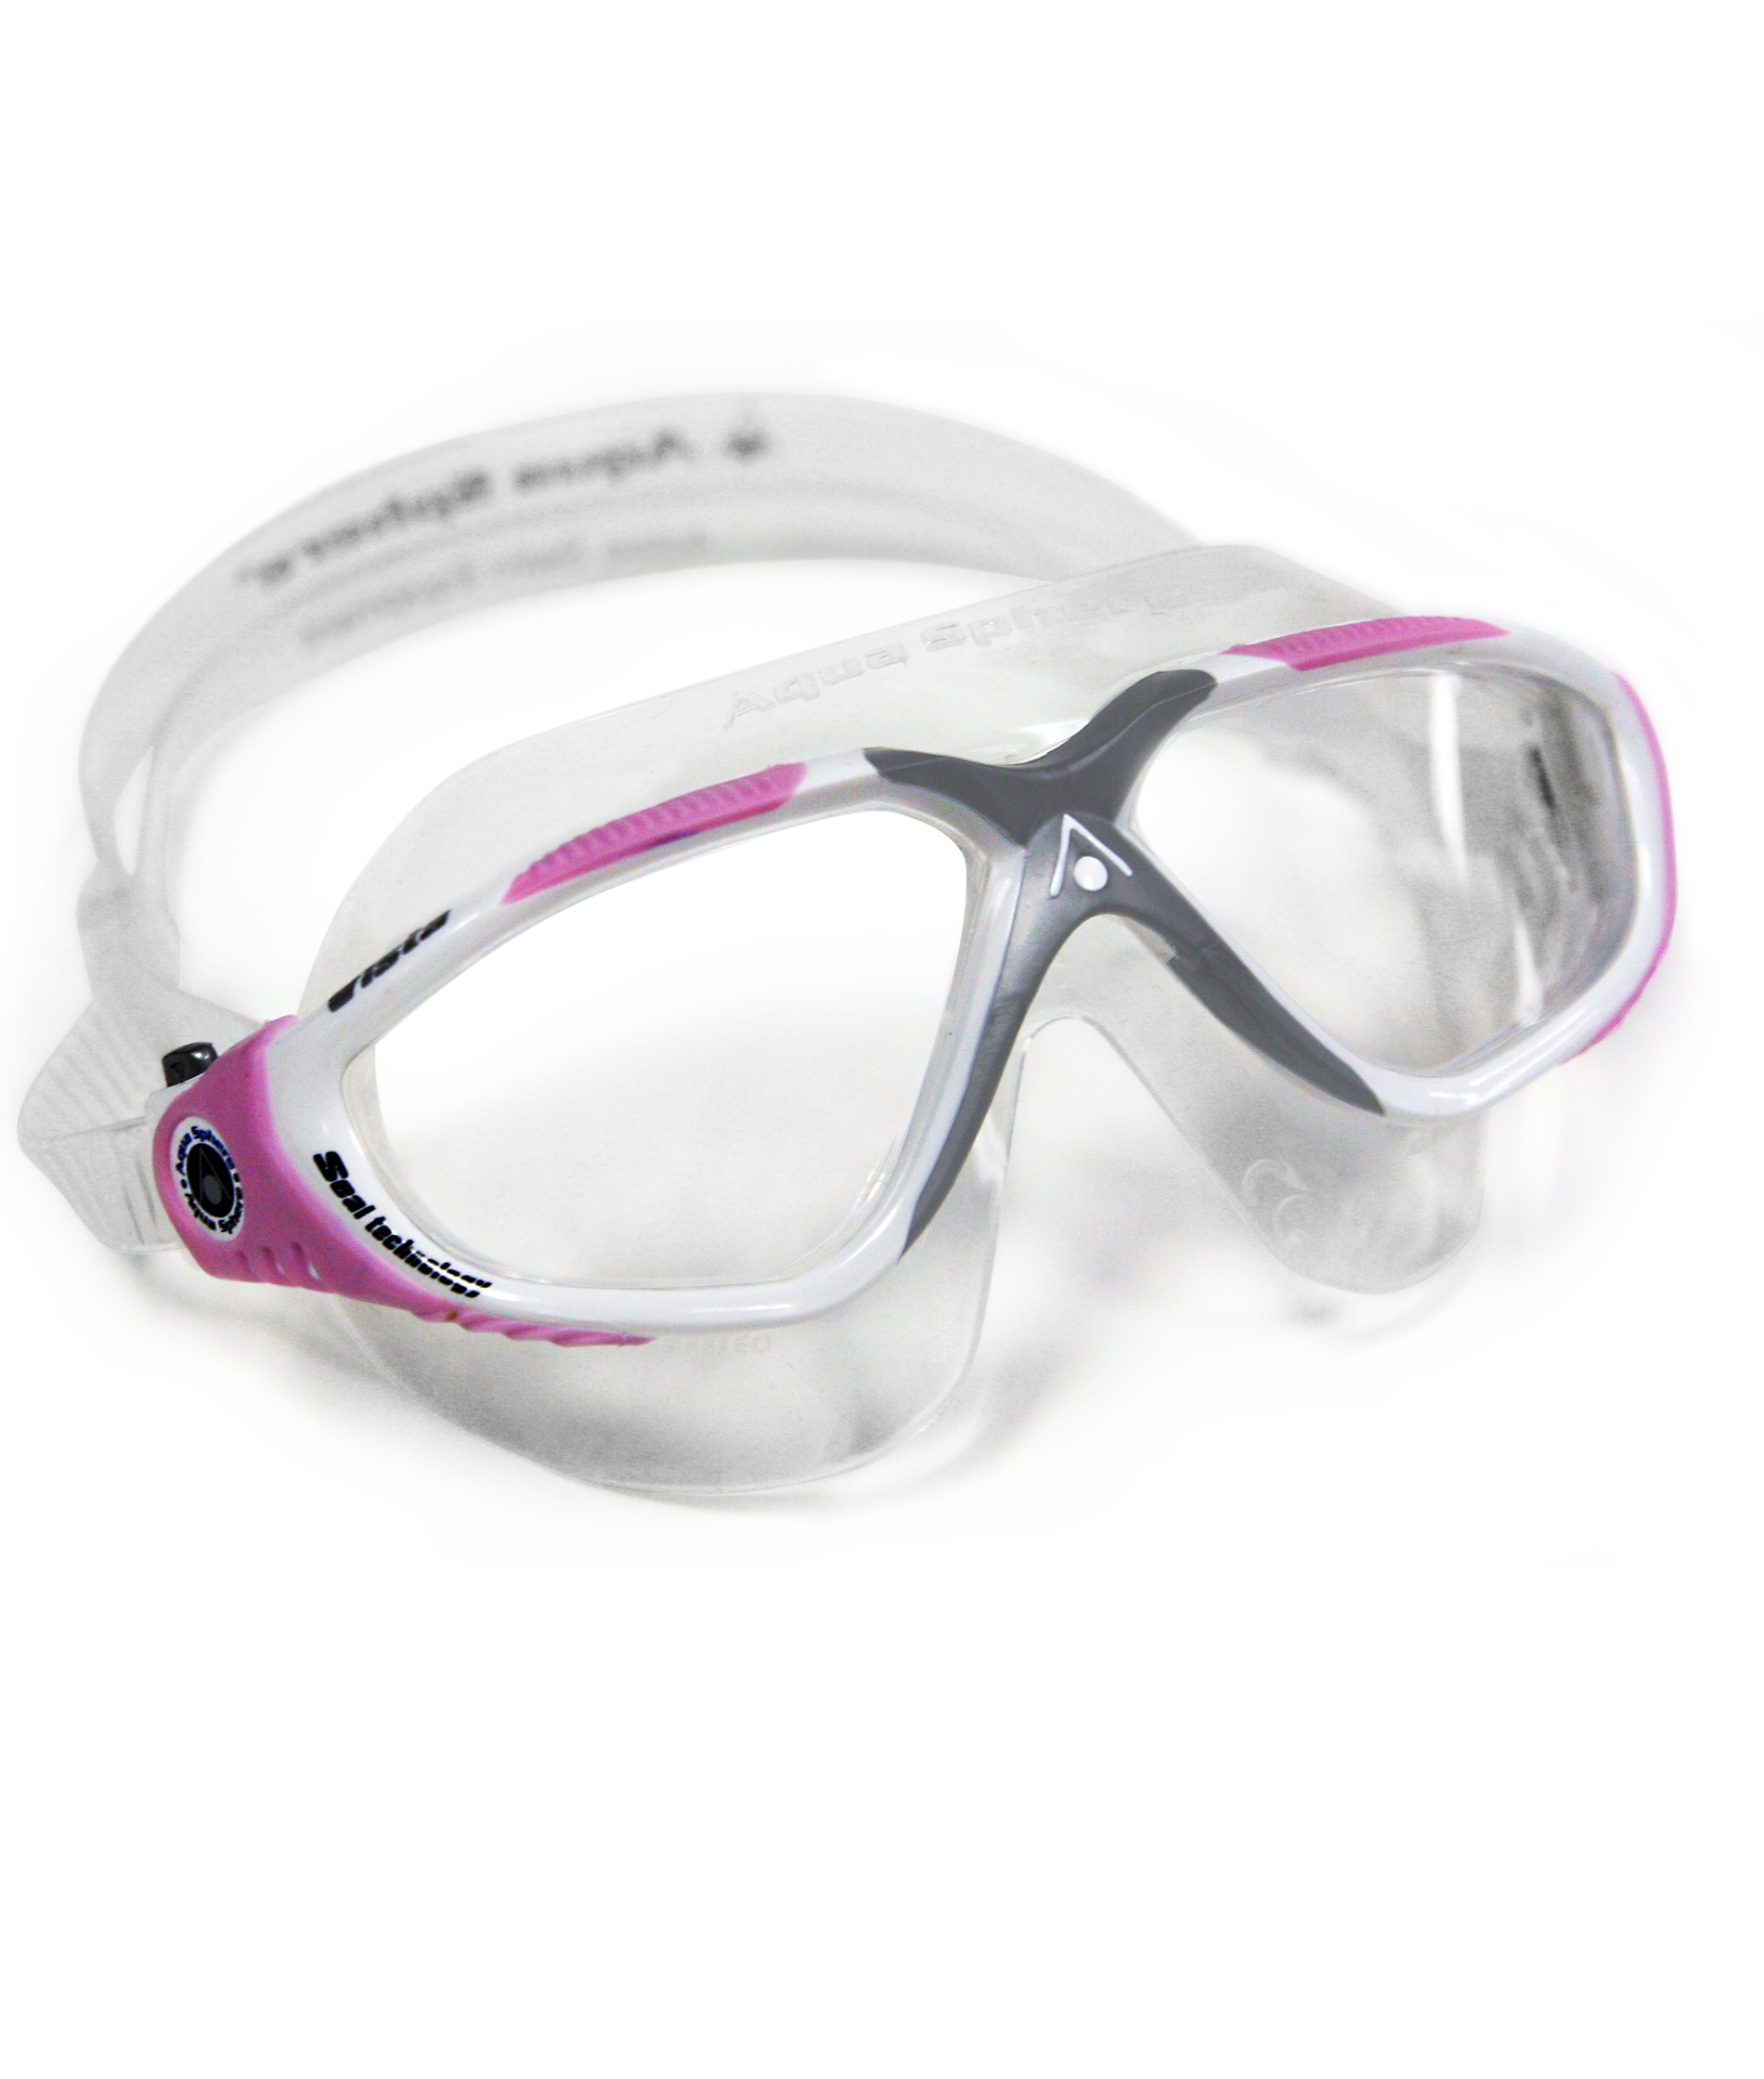 Aqua Sphere Ladies Vista Mask - Pink/White/Grey